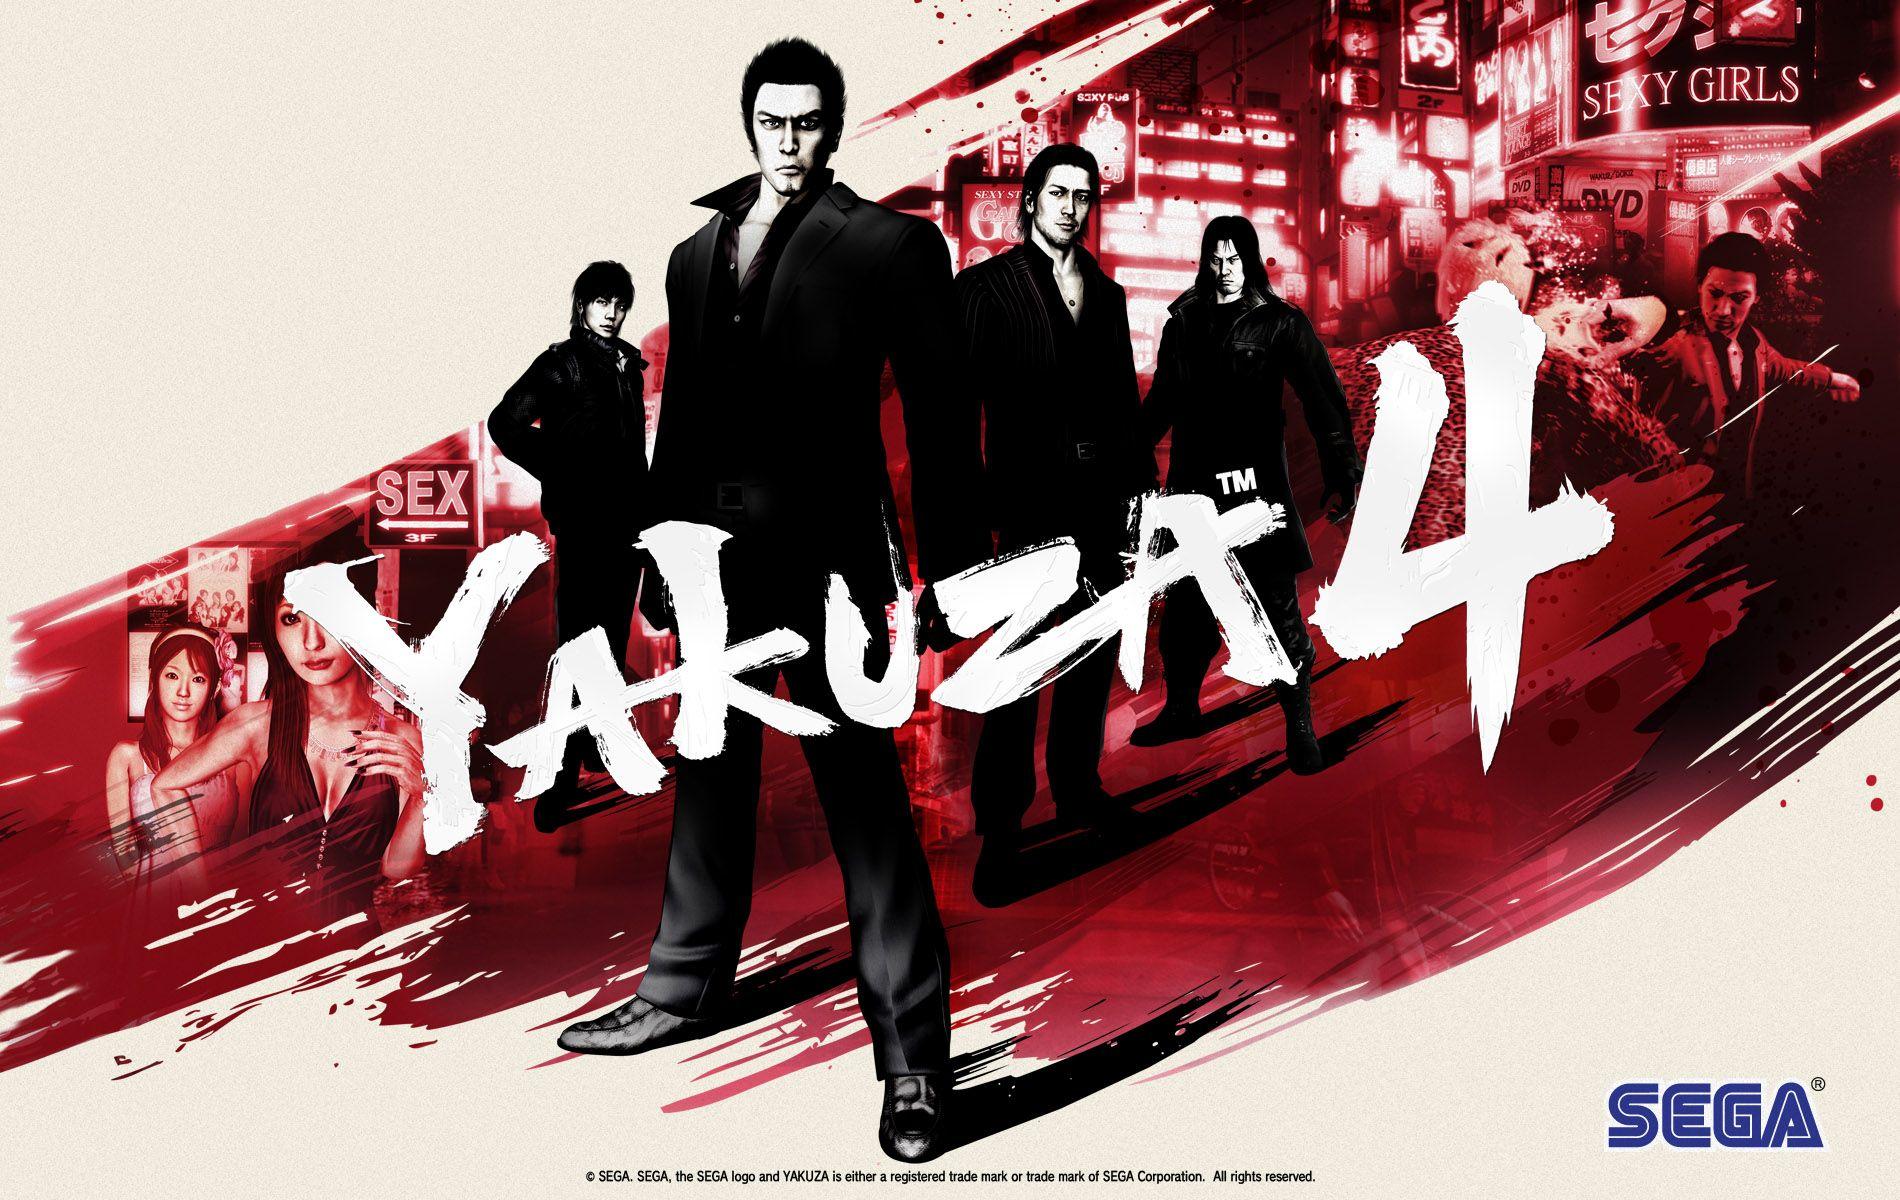 download yakuza 4 ps3 for free